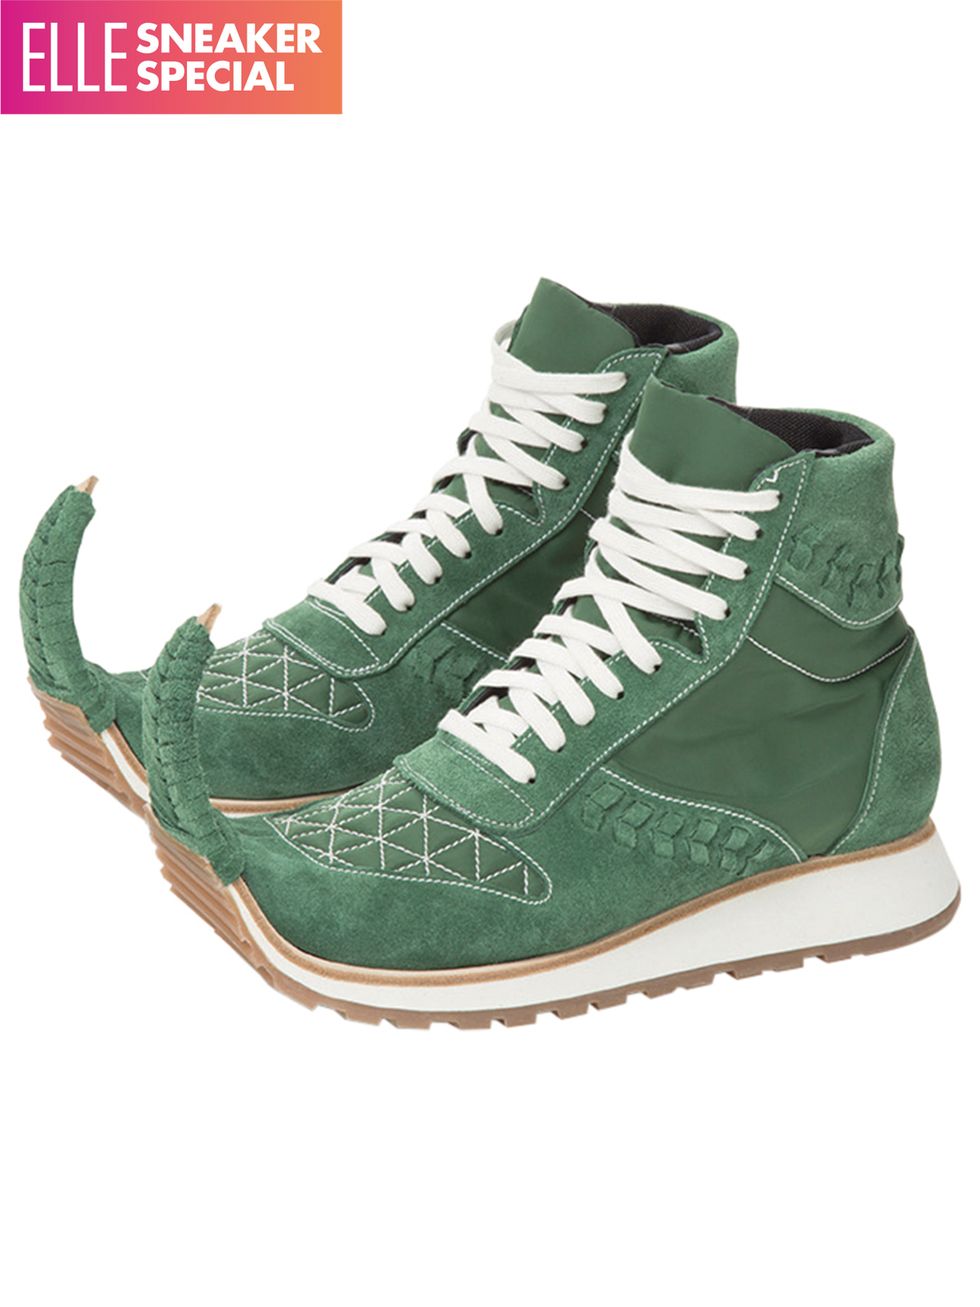 Footwear, Product, Shoe, Green, White, Teal, Logo, Carmine, Aqua, Tan, 